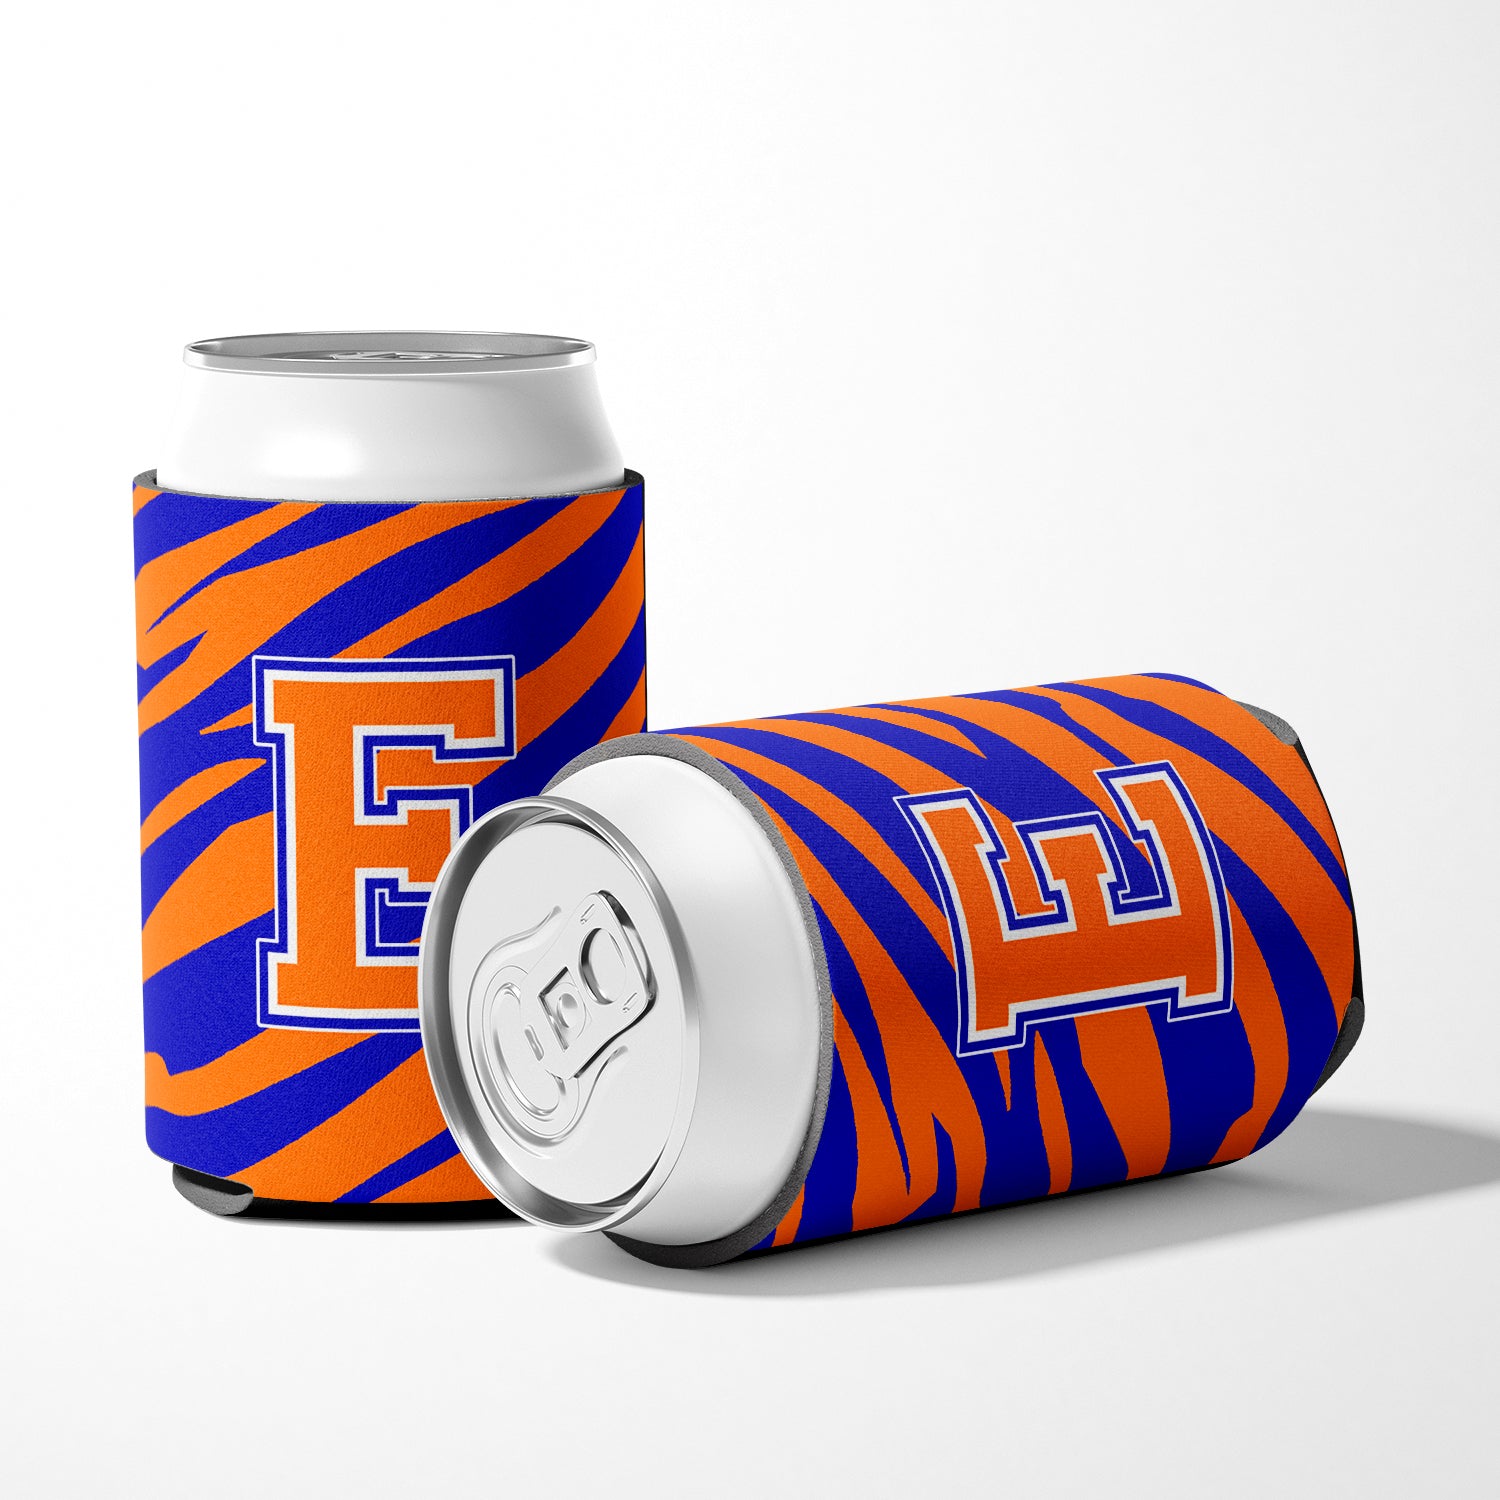 Letter E Initial Monogram Tiger Stripe Blue Orange Can or Bottle Beverage Insulator Hugger